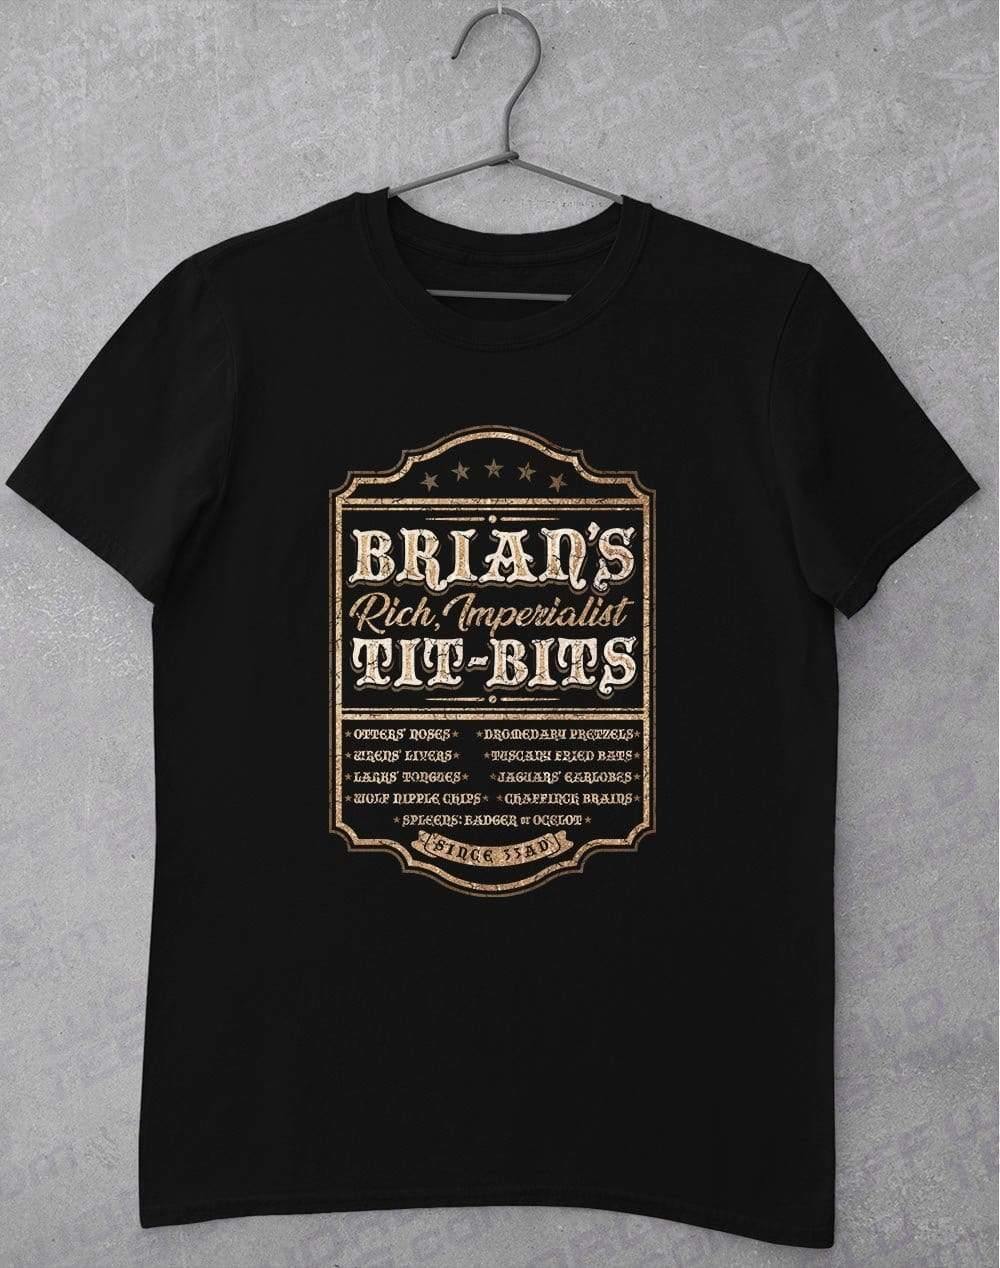 Brian's Tit-Bits T-Shirt S / Black  - Off World Tees